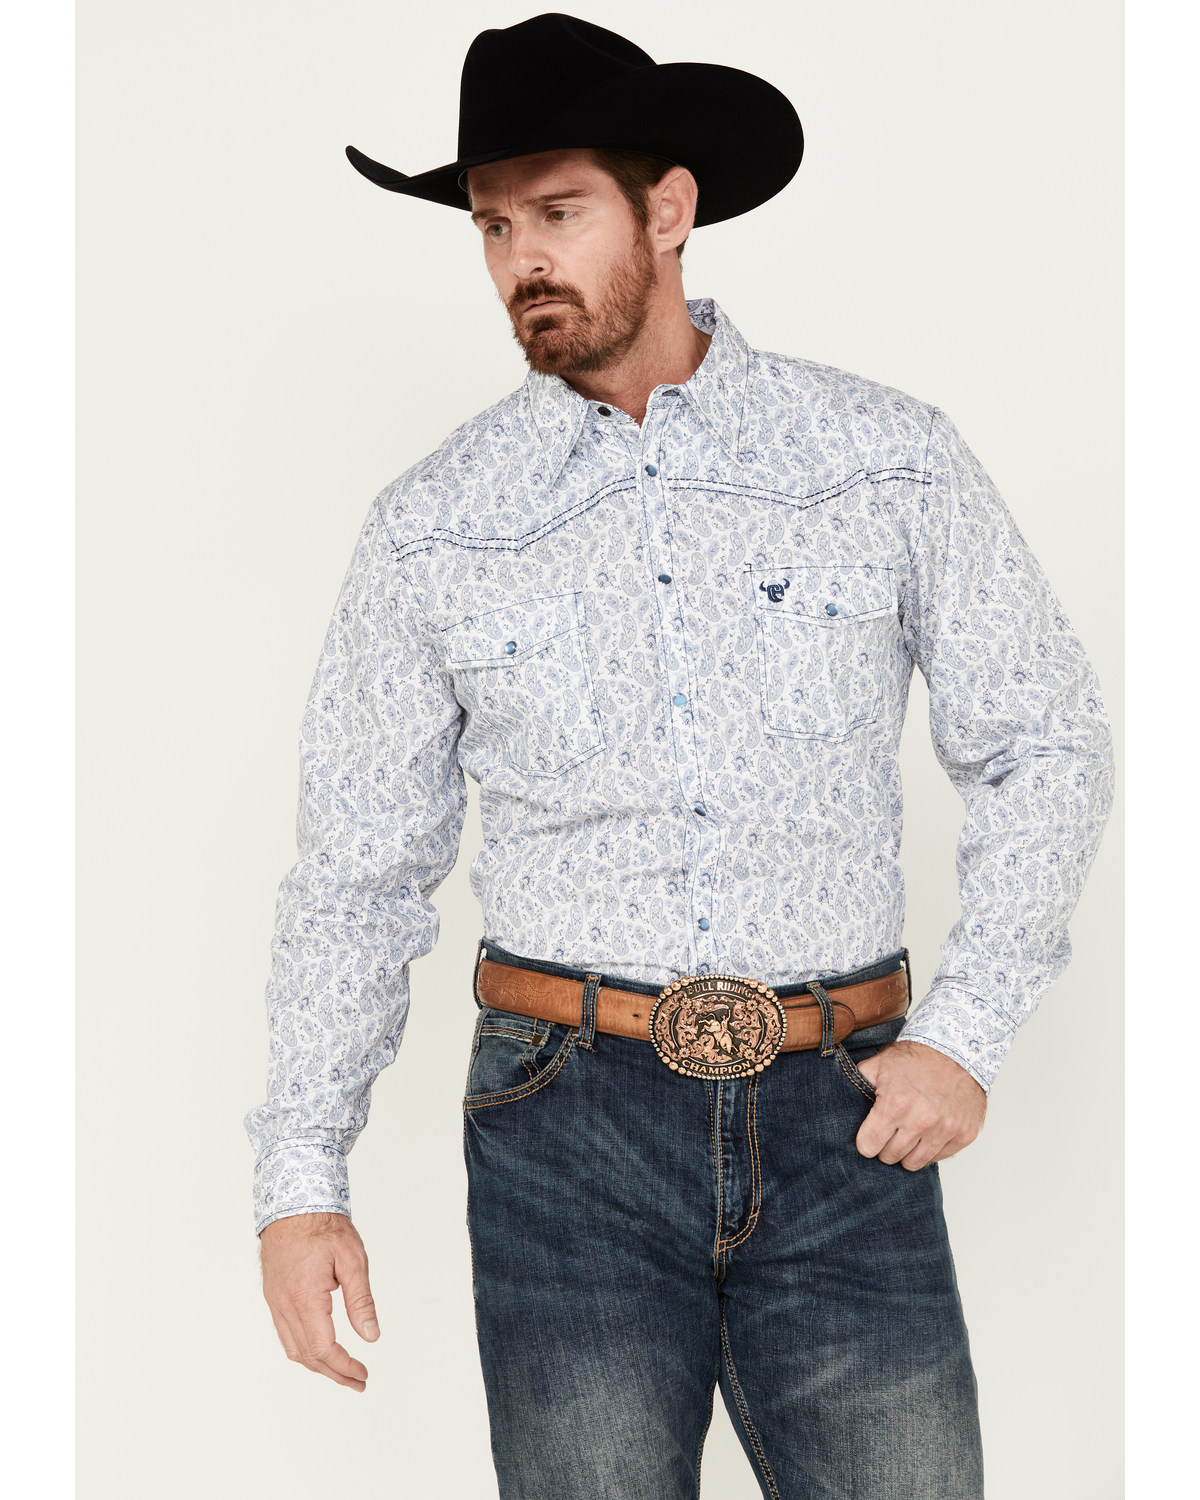 Cowboy Hardware Men's Tonal Paisley Print Long Sleeve Pearl Snap Western Shirt